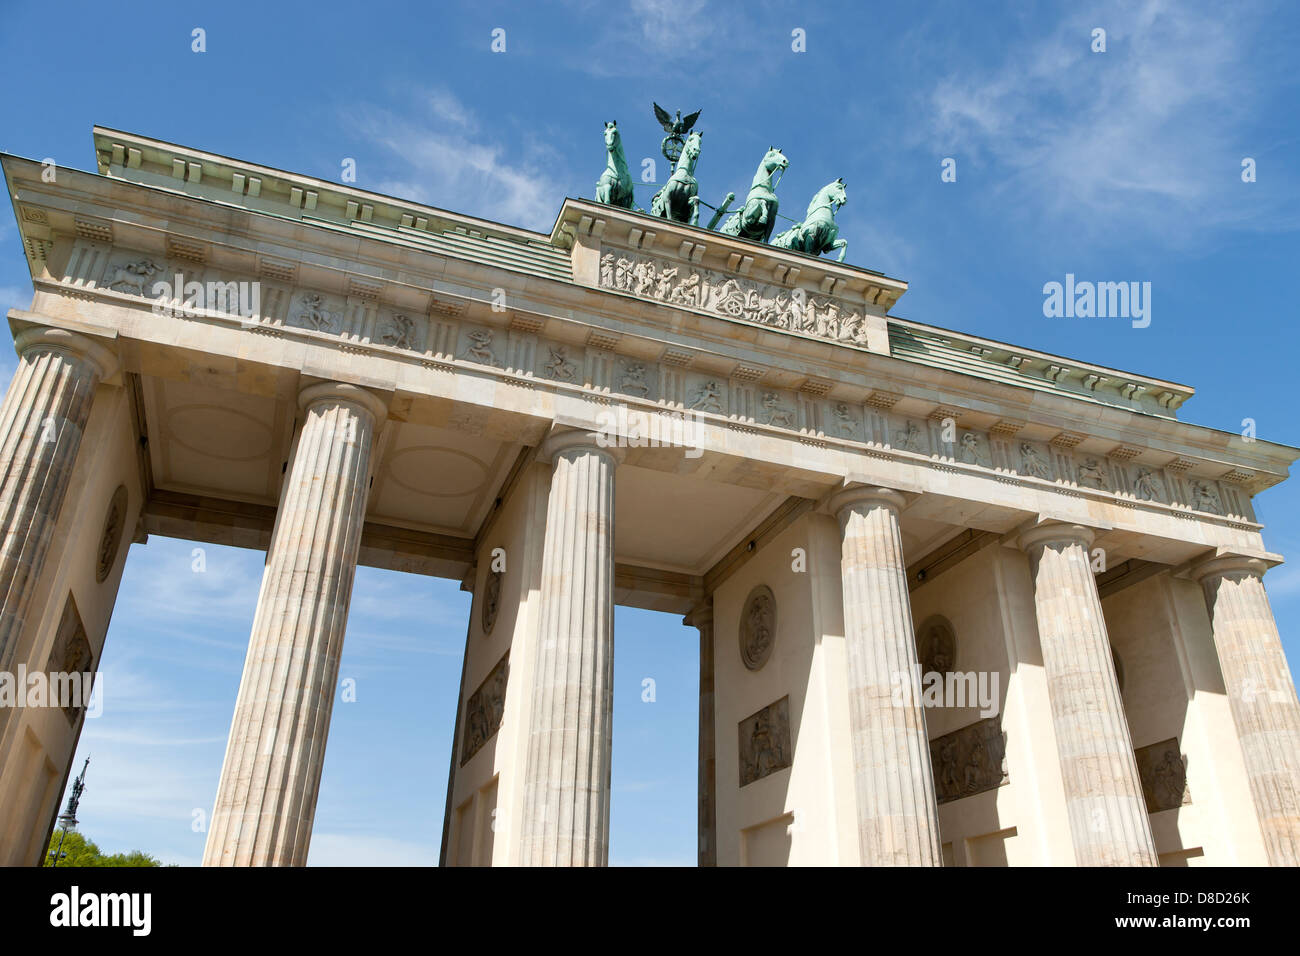 The Brandenburger Gate in Berlin Germany Stock Photo